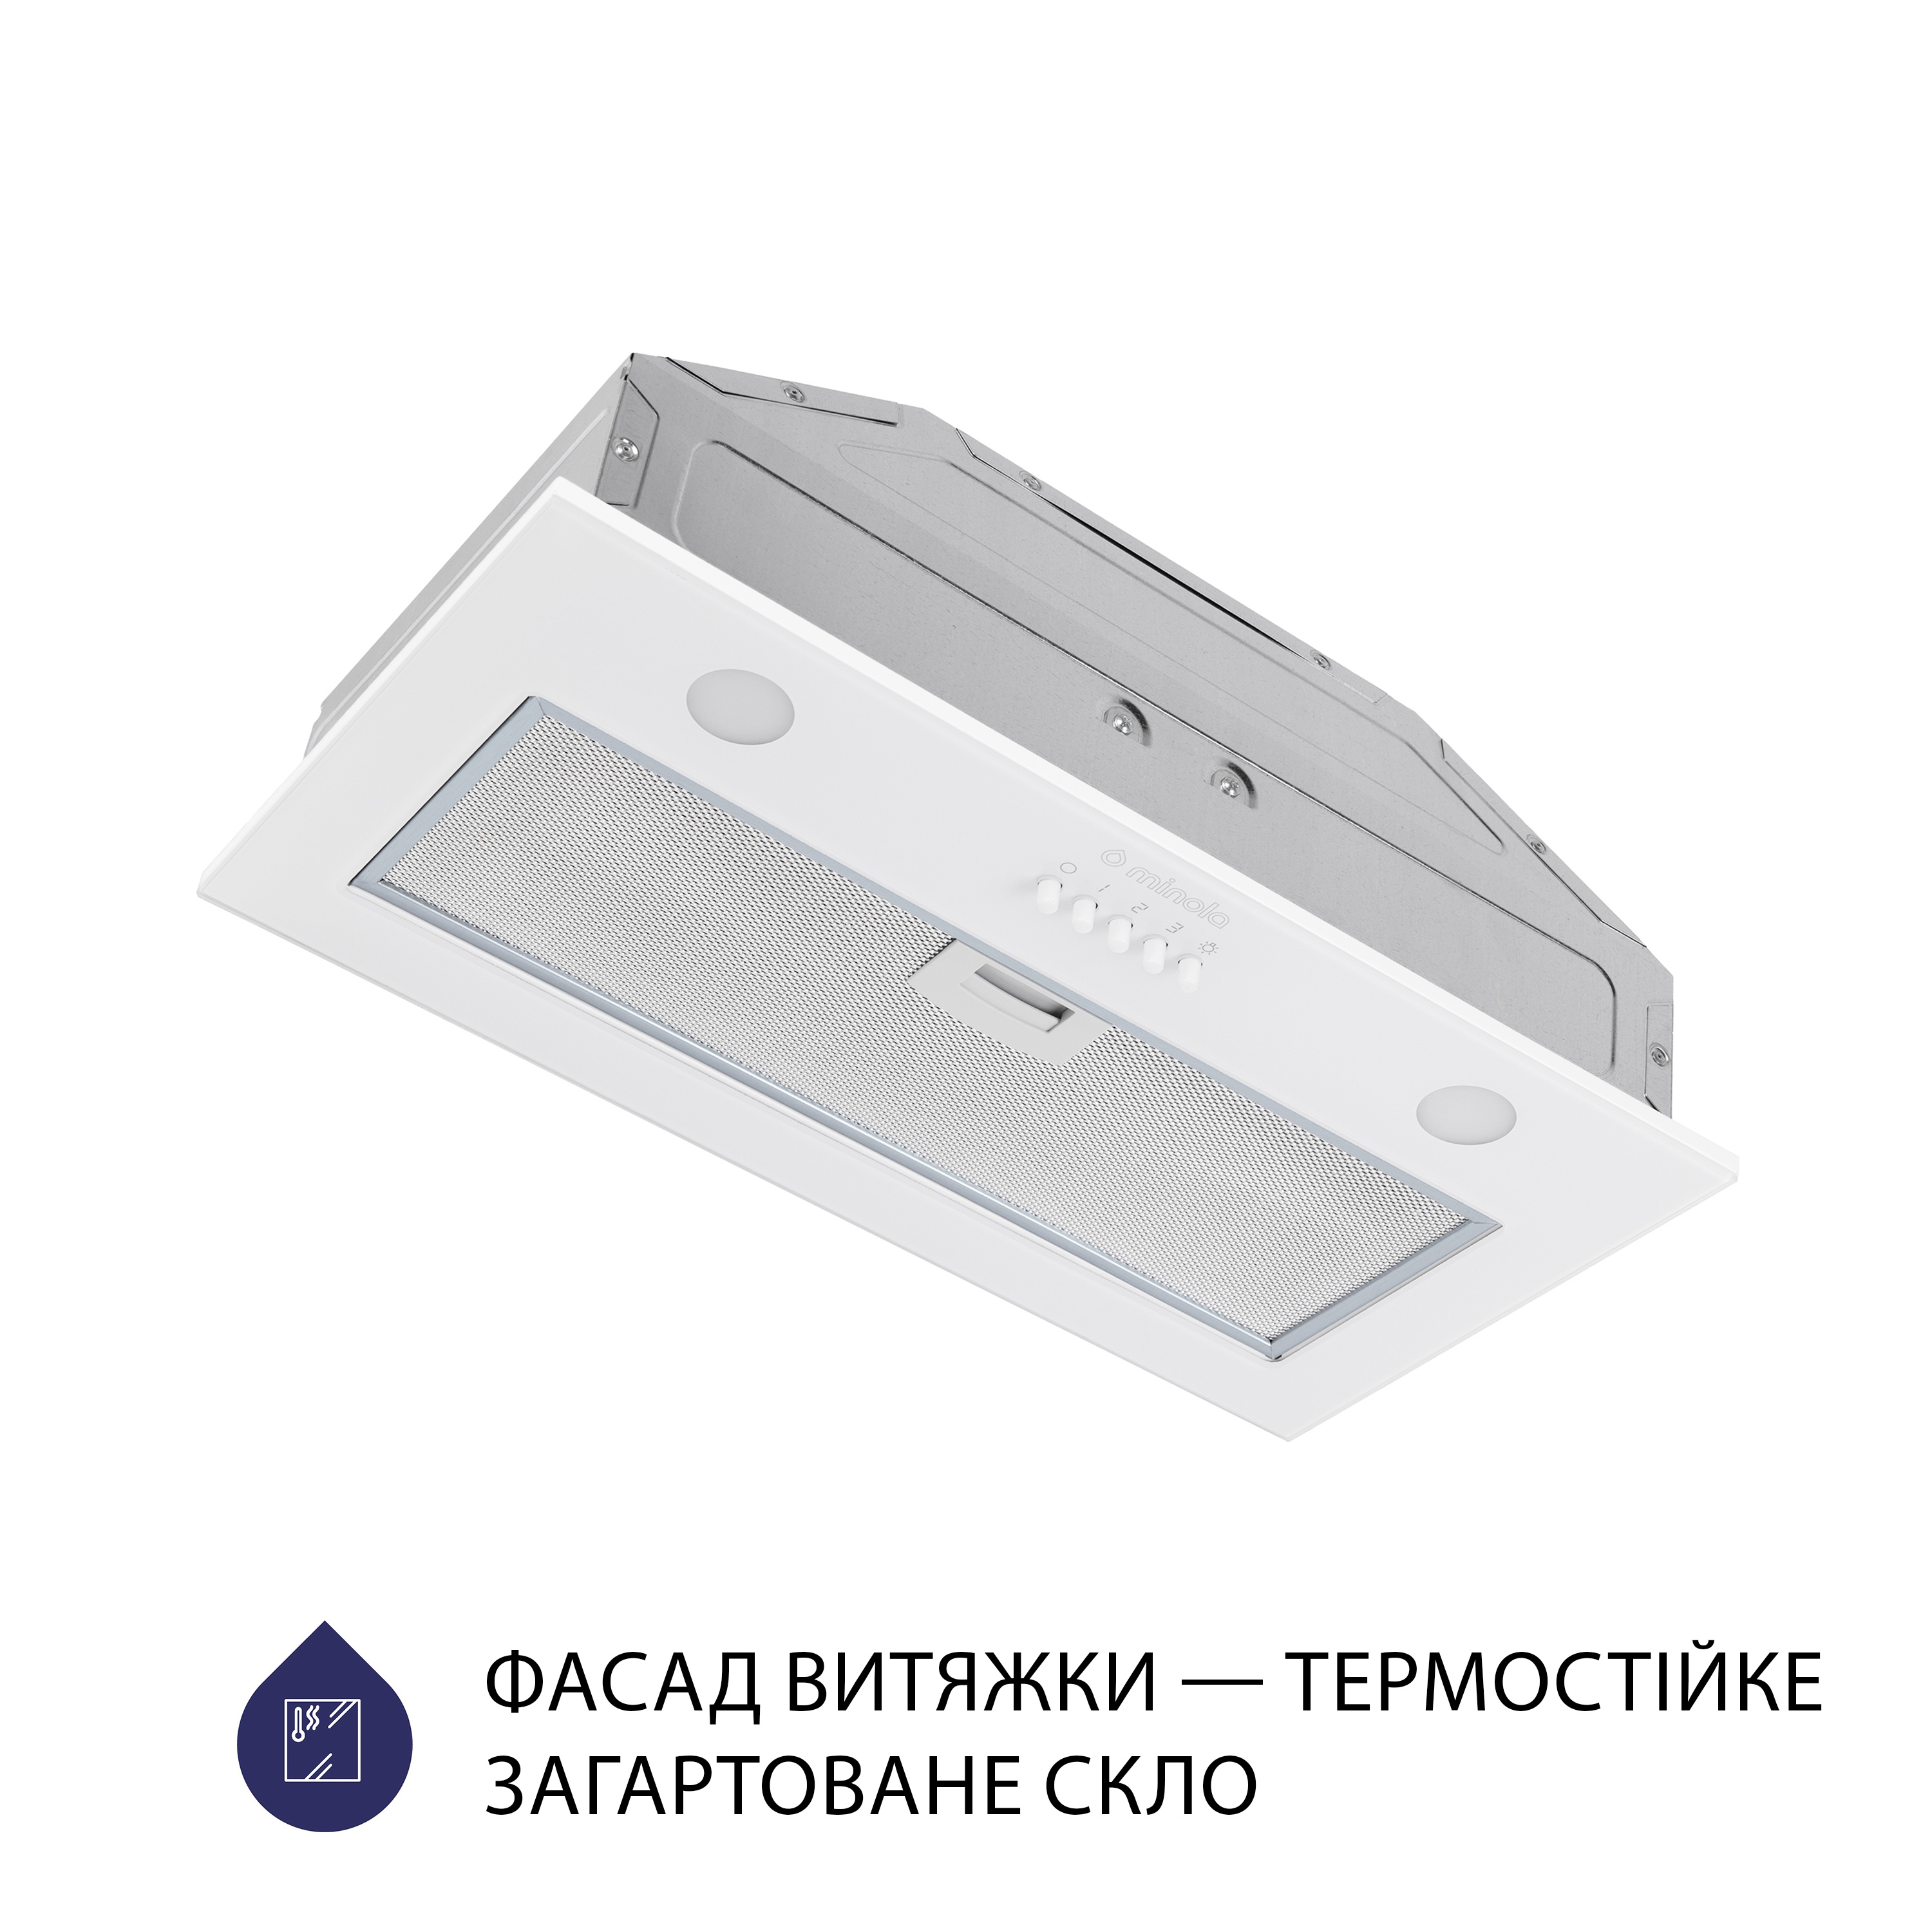 продаём Minola HBI 52621 WH GLASS 700 LED в Украине - фото 4